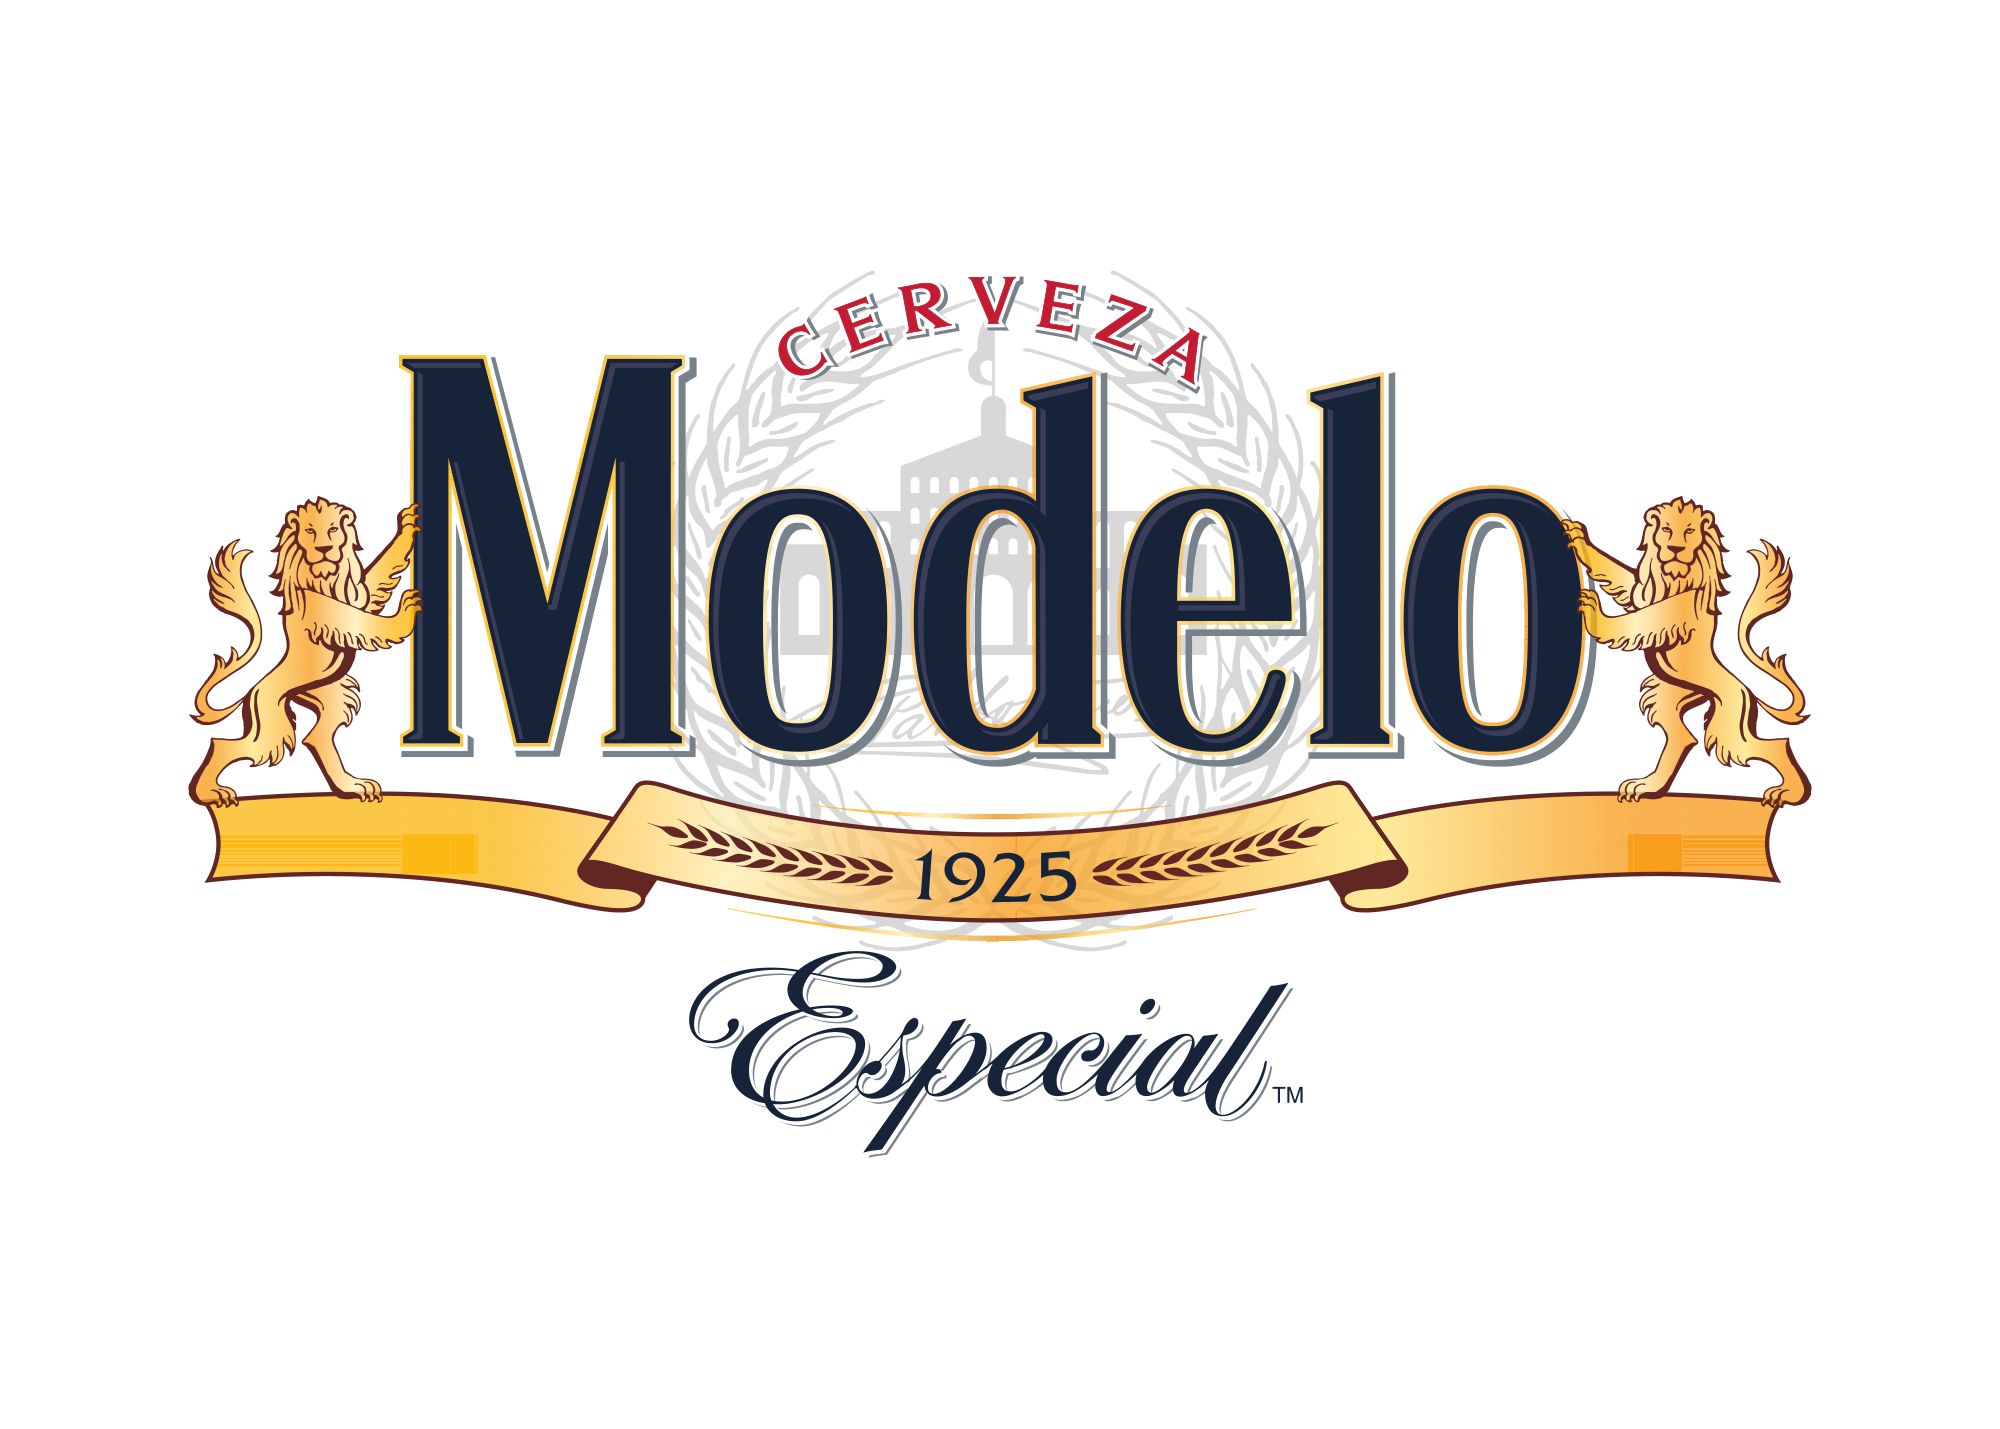 Download Negra Modelo Logo Png Negra Modelo Beer 6 Pa - vrogue.co